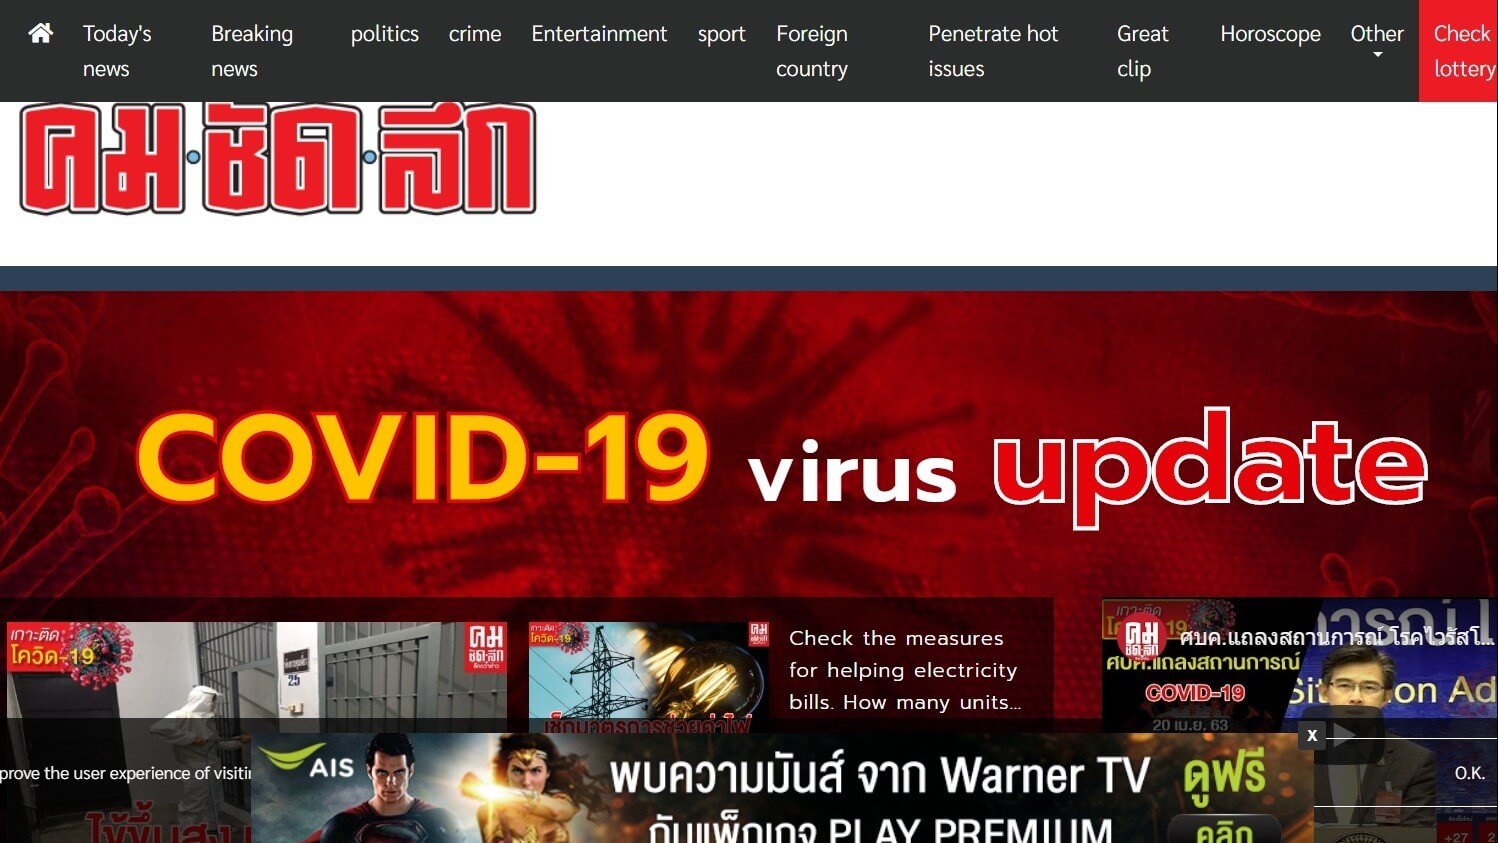 thailand newspapers 8 kom chad luek website